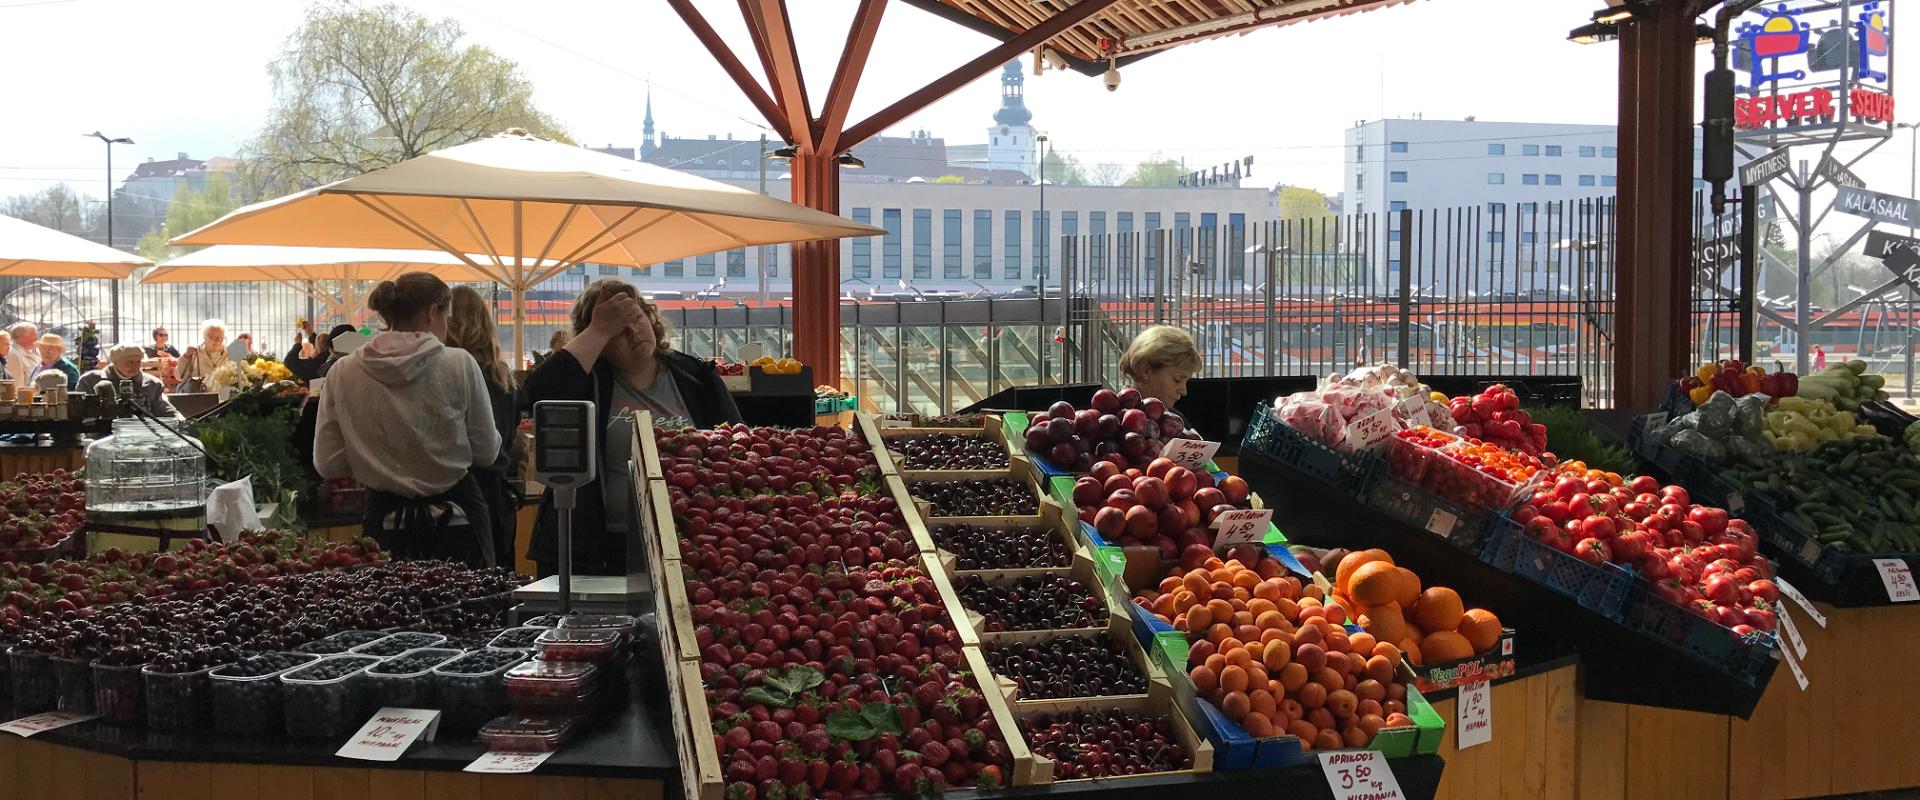 Tallinn Food Tour, local market